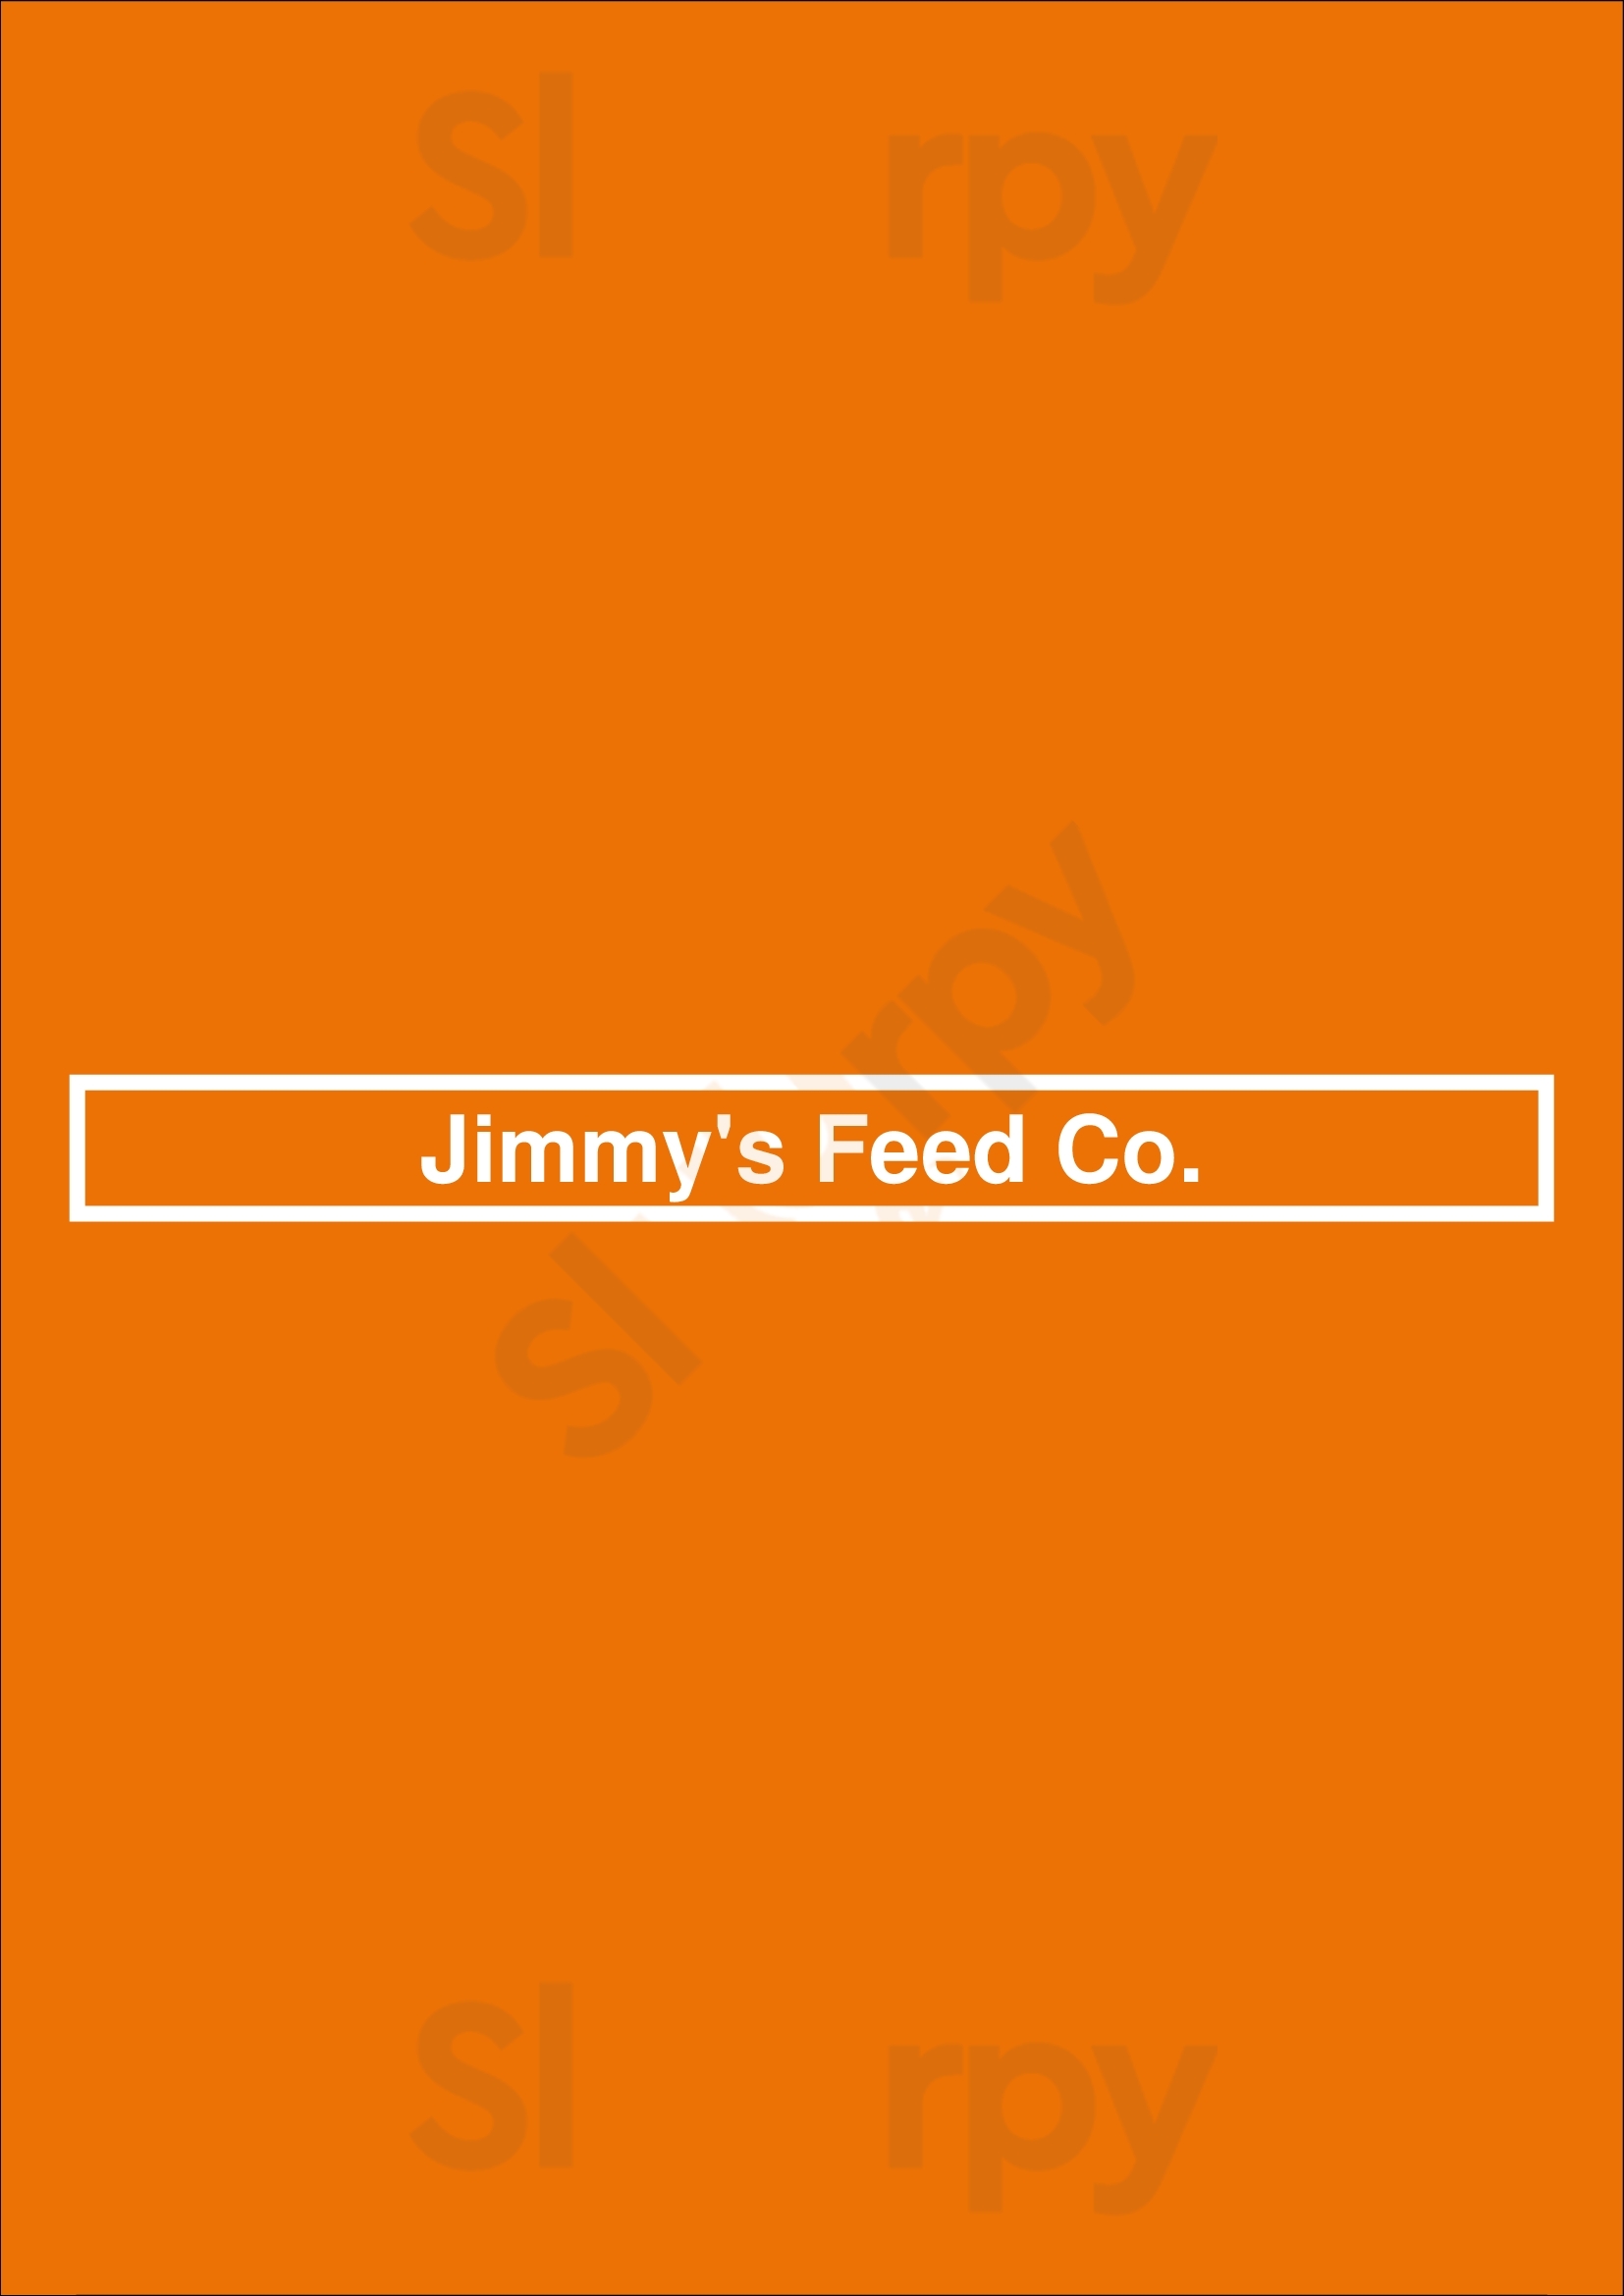 Jimmy's Feed Co. Waterloo Menu - 1